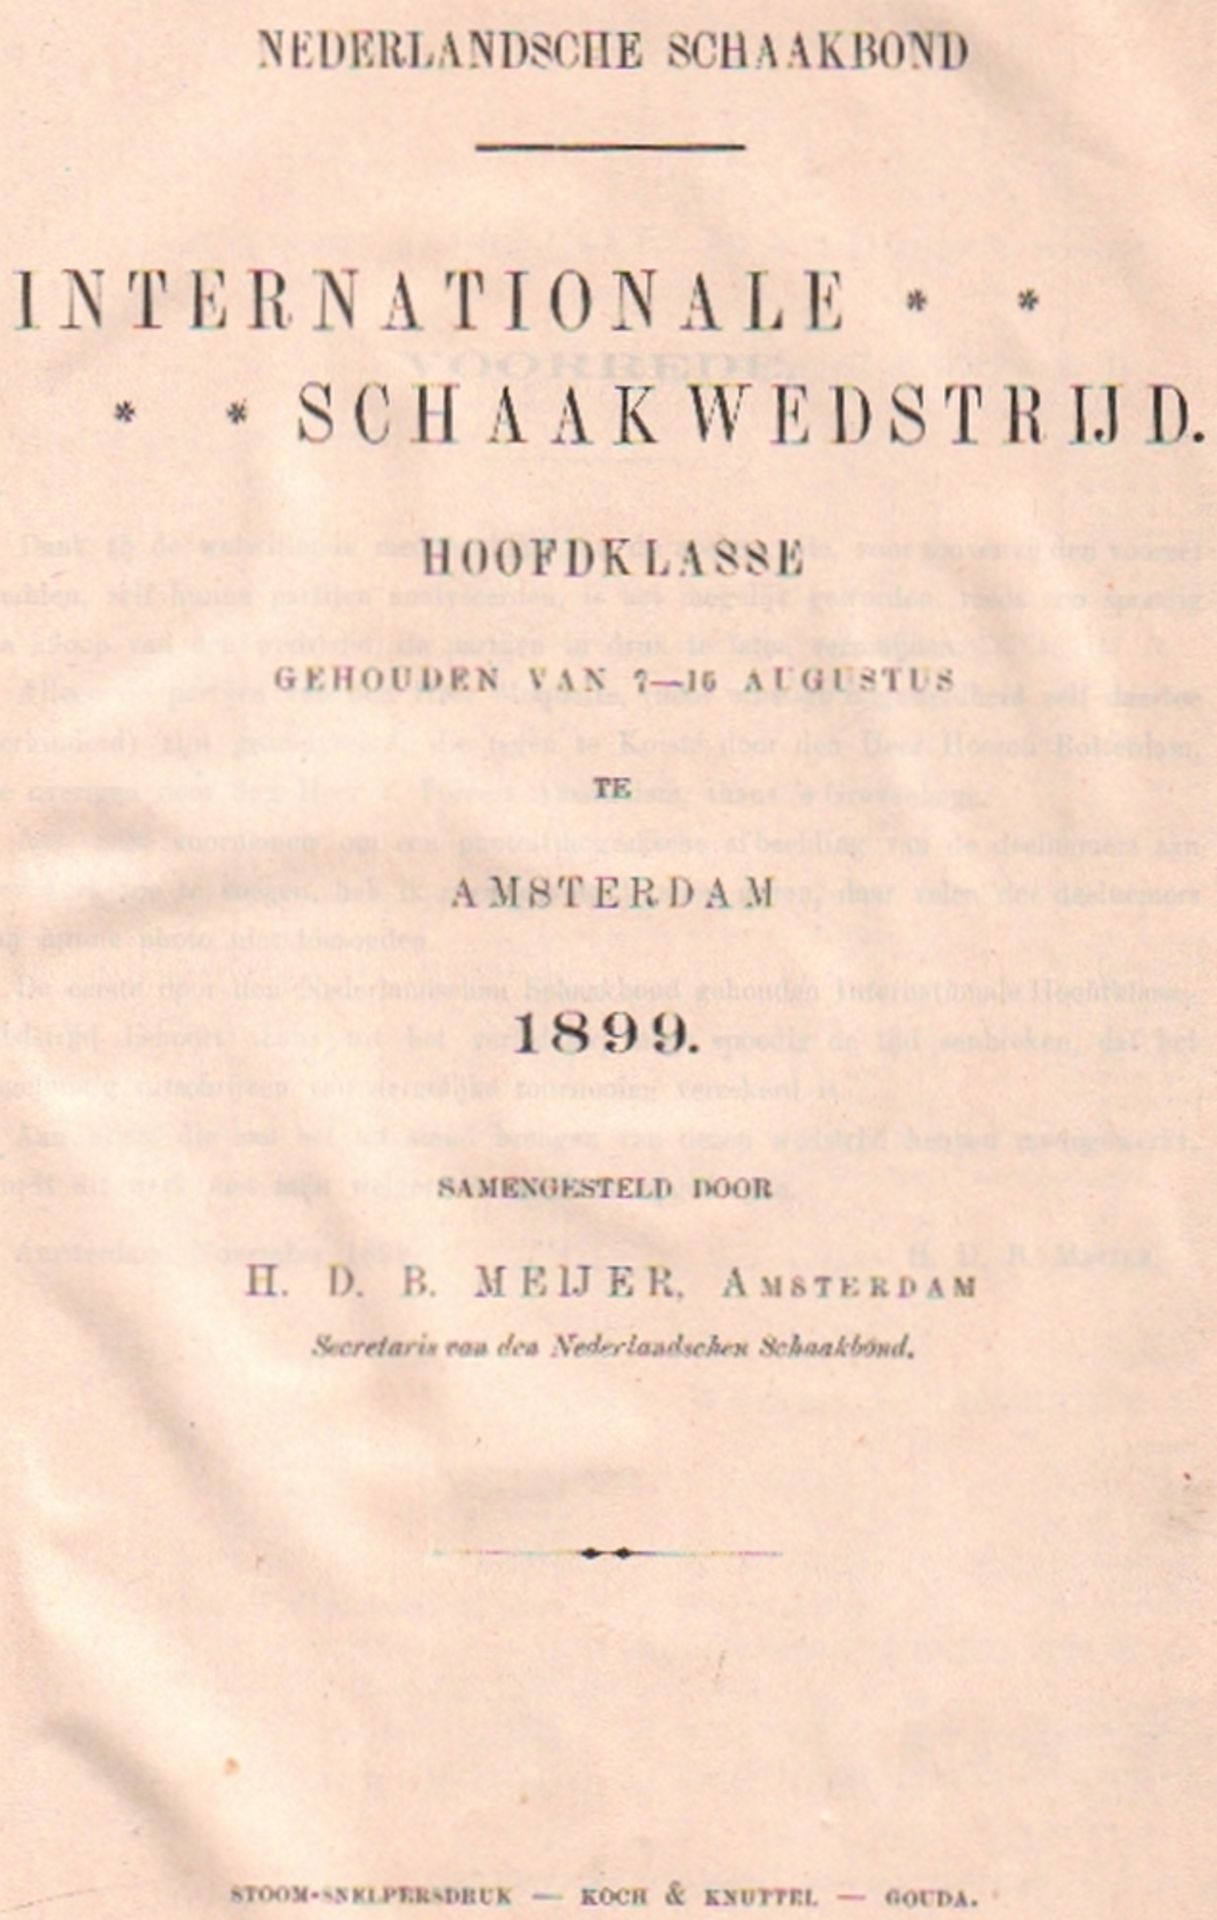 Amsterdam 1899. Meijer, H. D. B. (Hrsg.) Nederlandsche Schaakbond. Internationale Schaakwedstrijd.